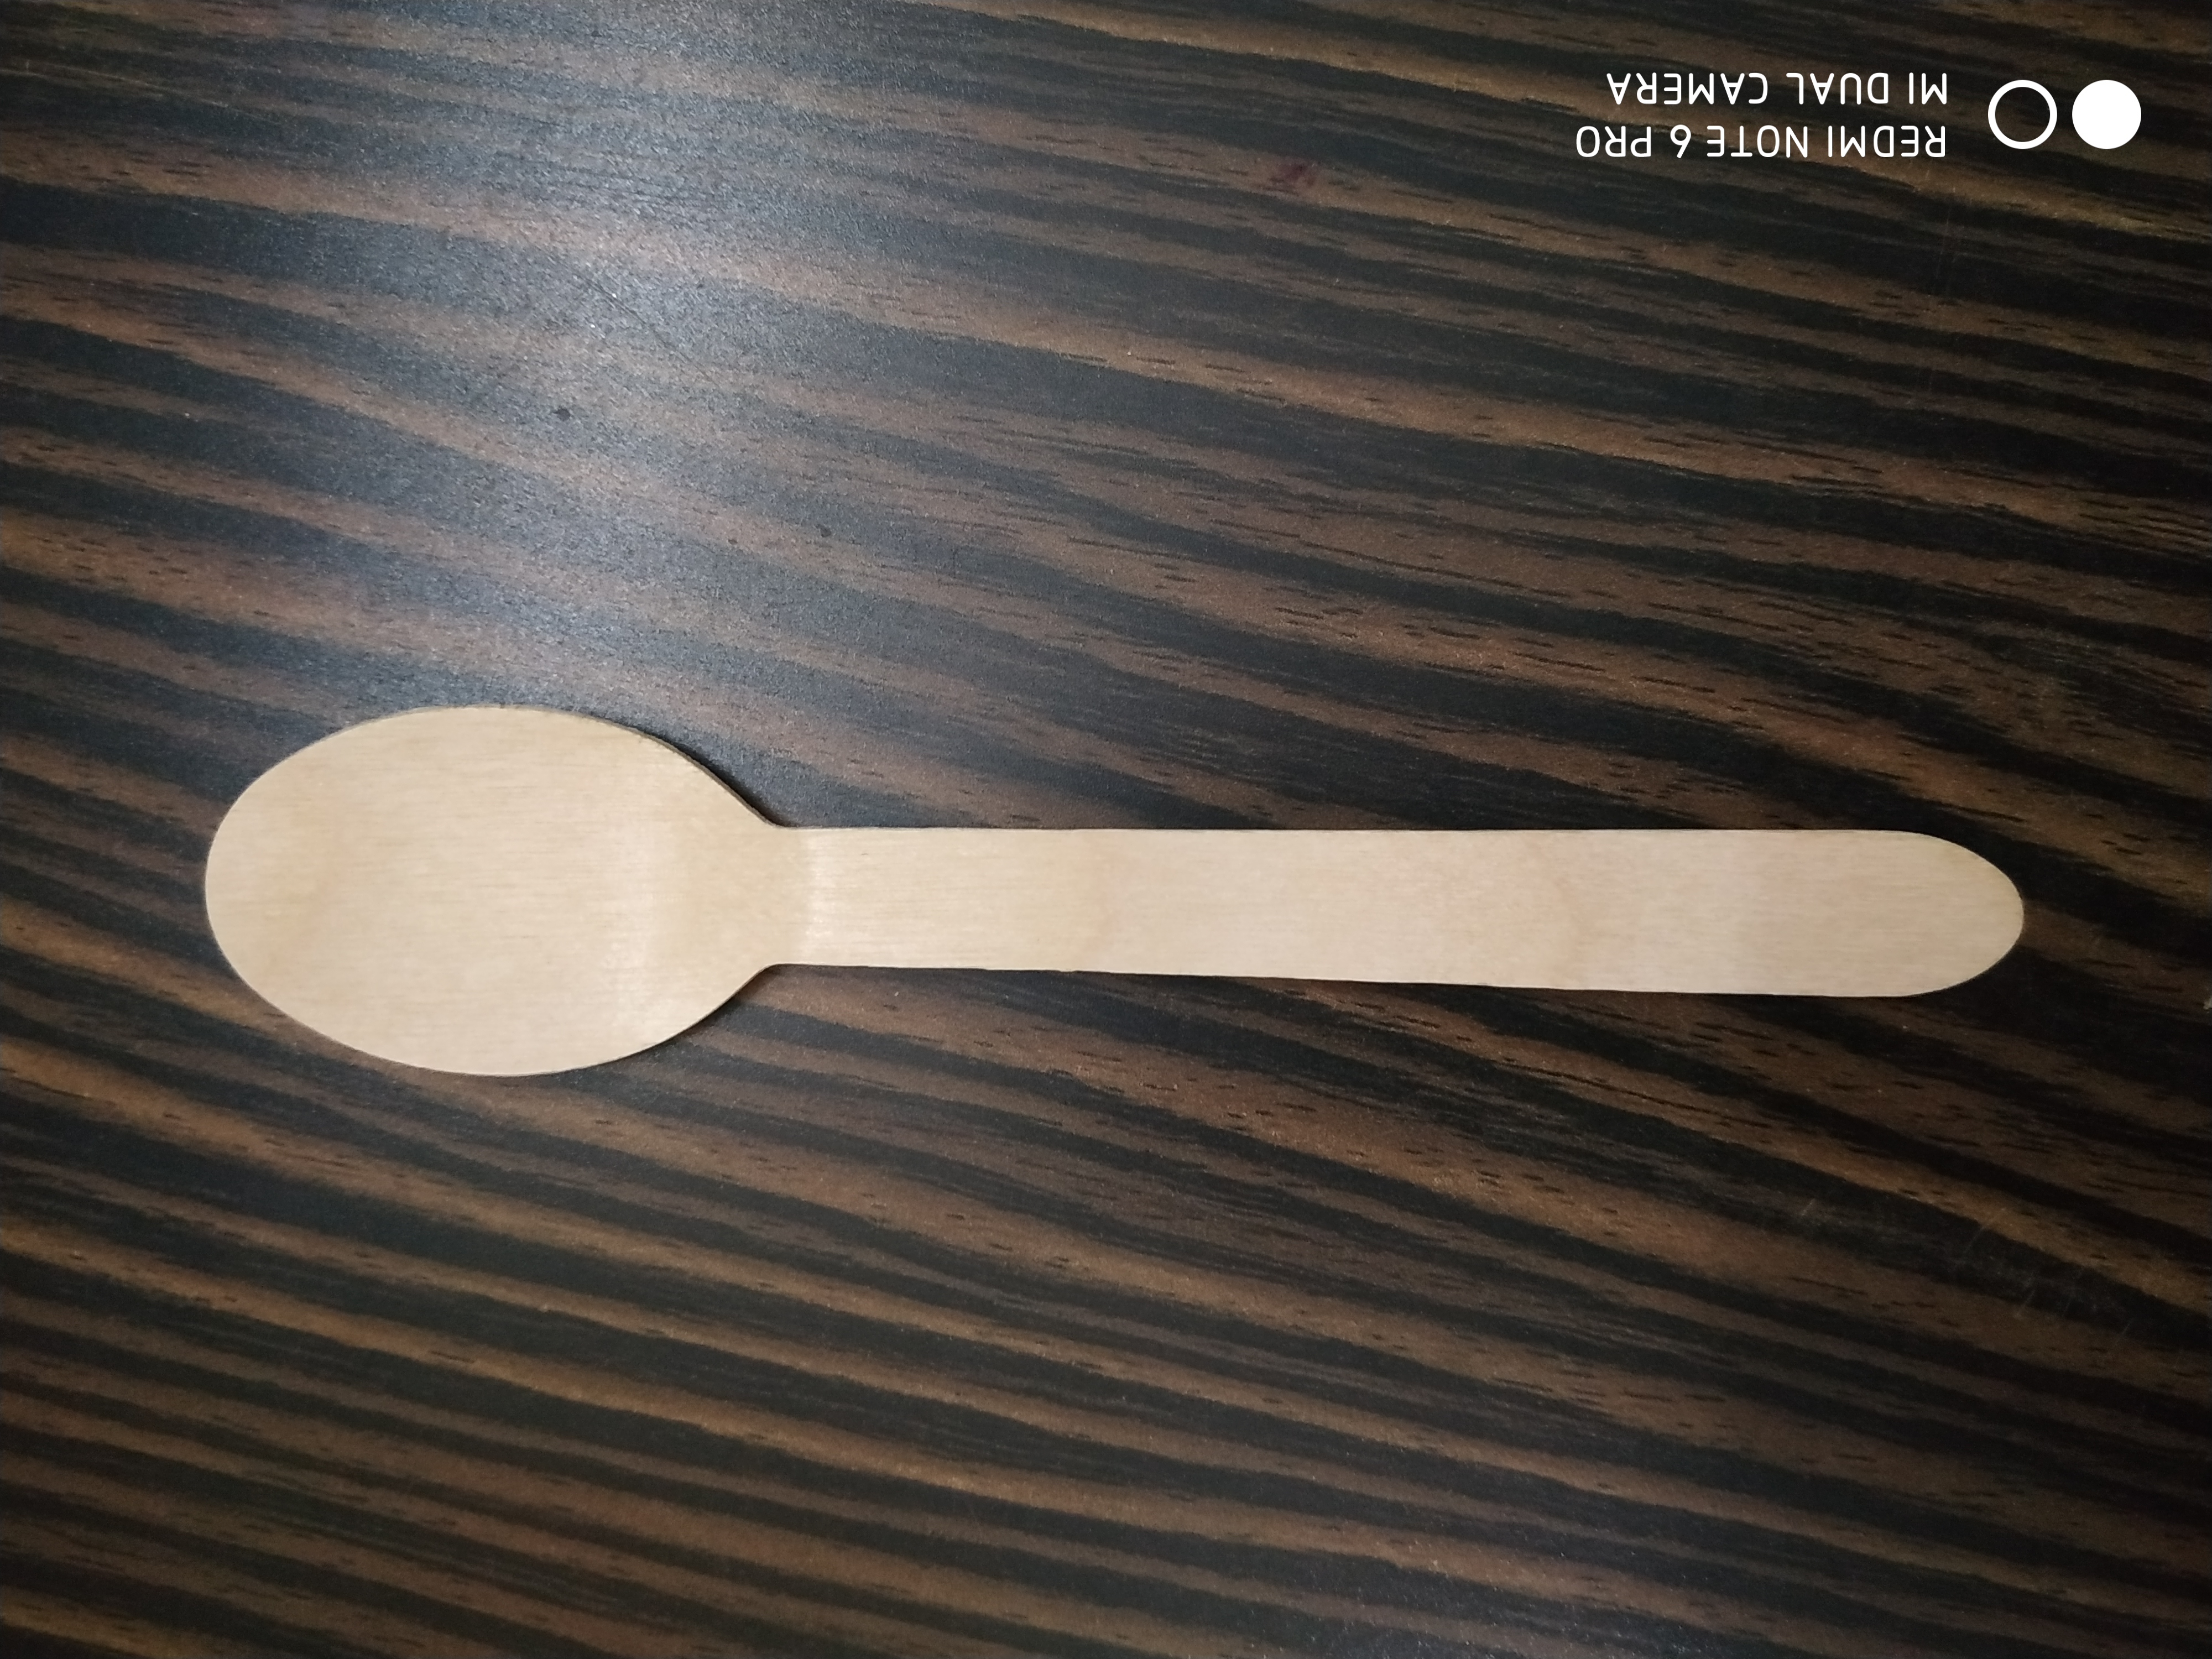 140 mm wooden spoon